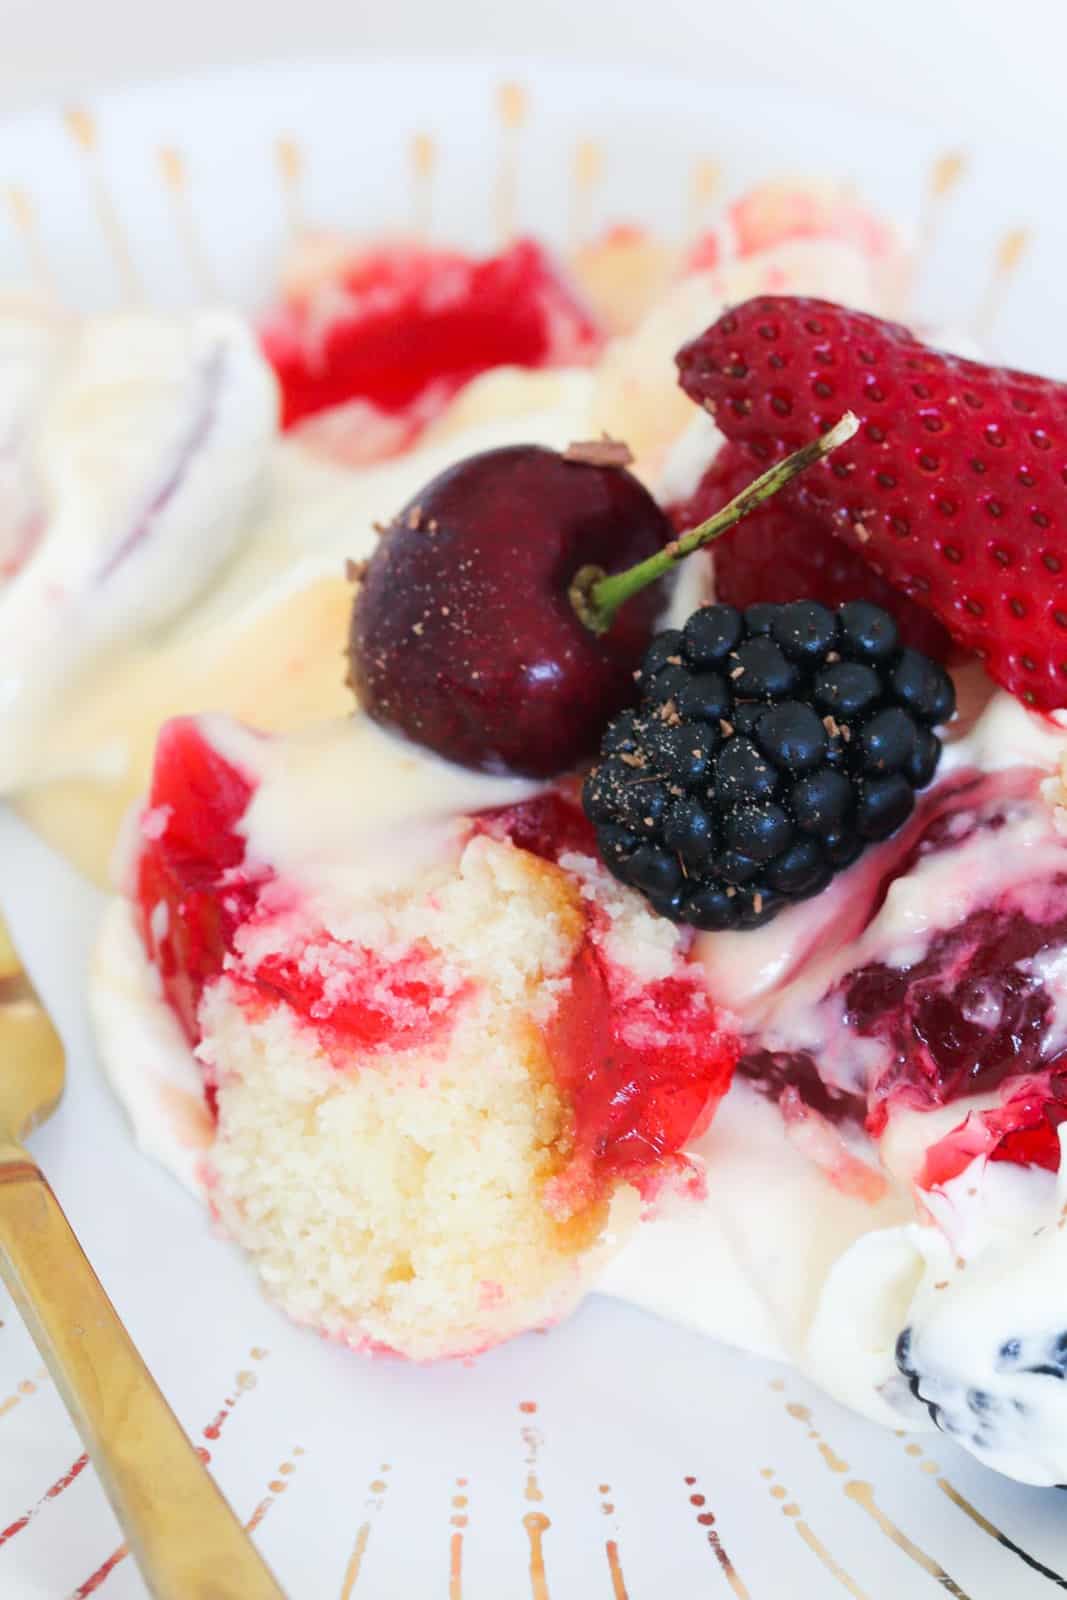 Fresh berries, cream, custard and cake on a plate.